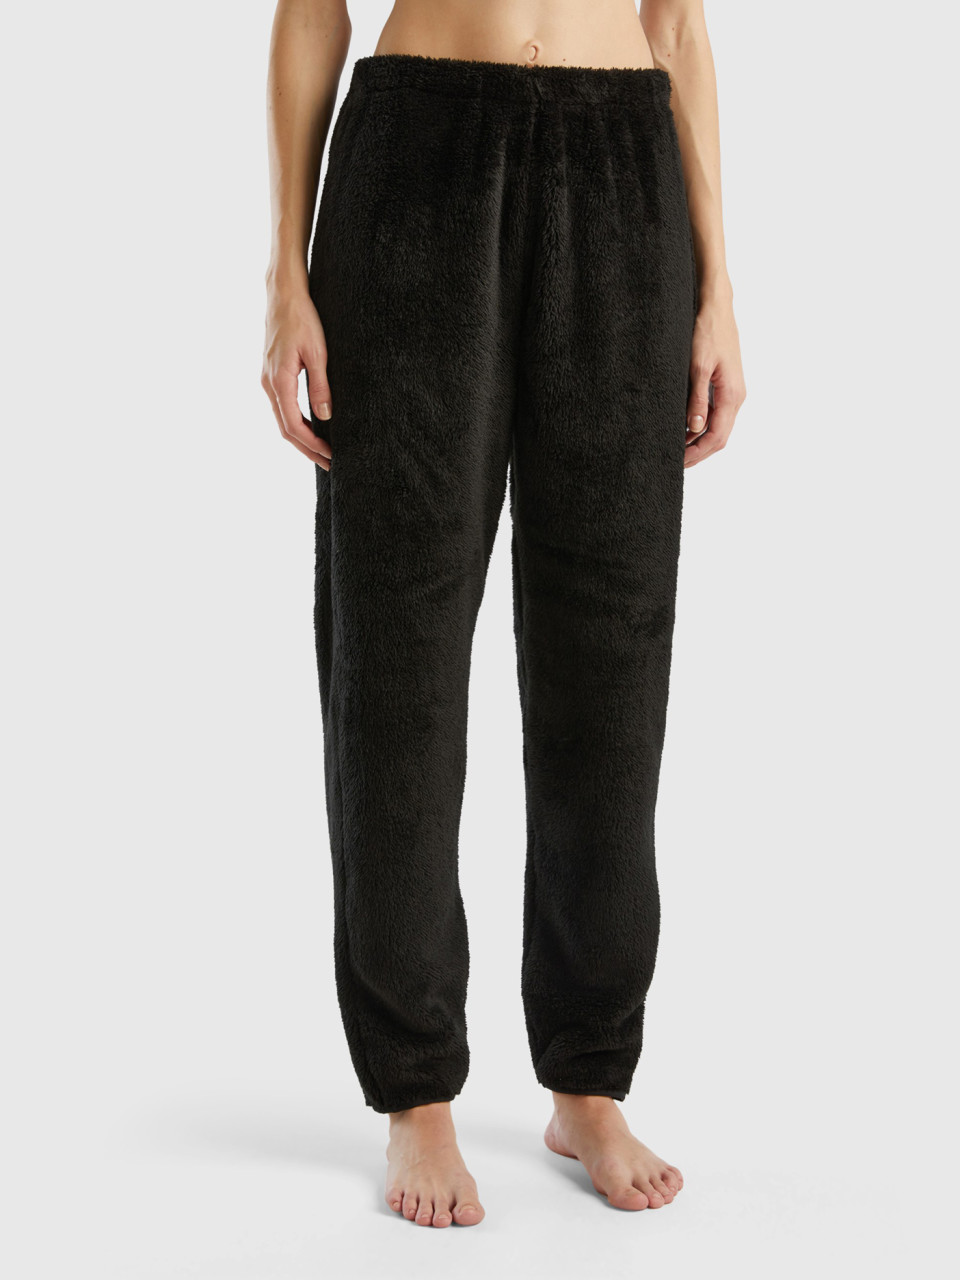 Benetton, Fur Pyjama Trousers, Black, Women